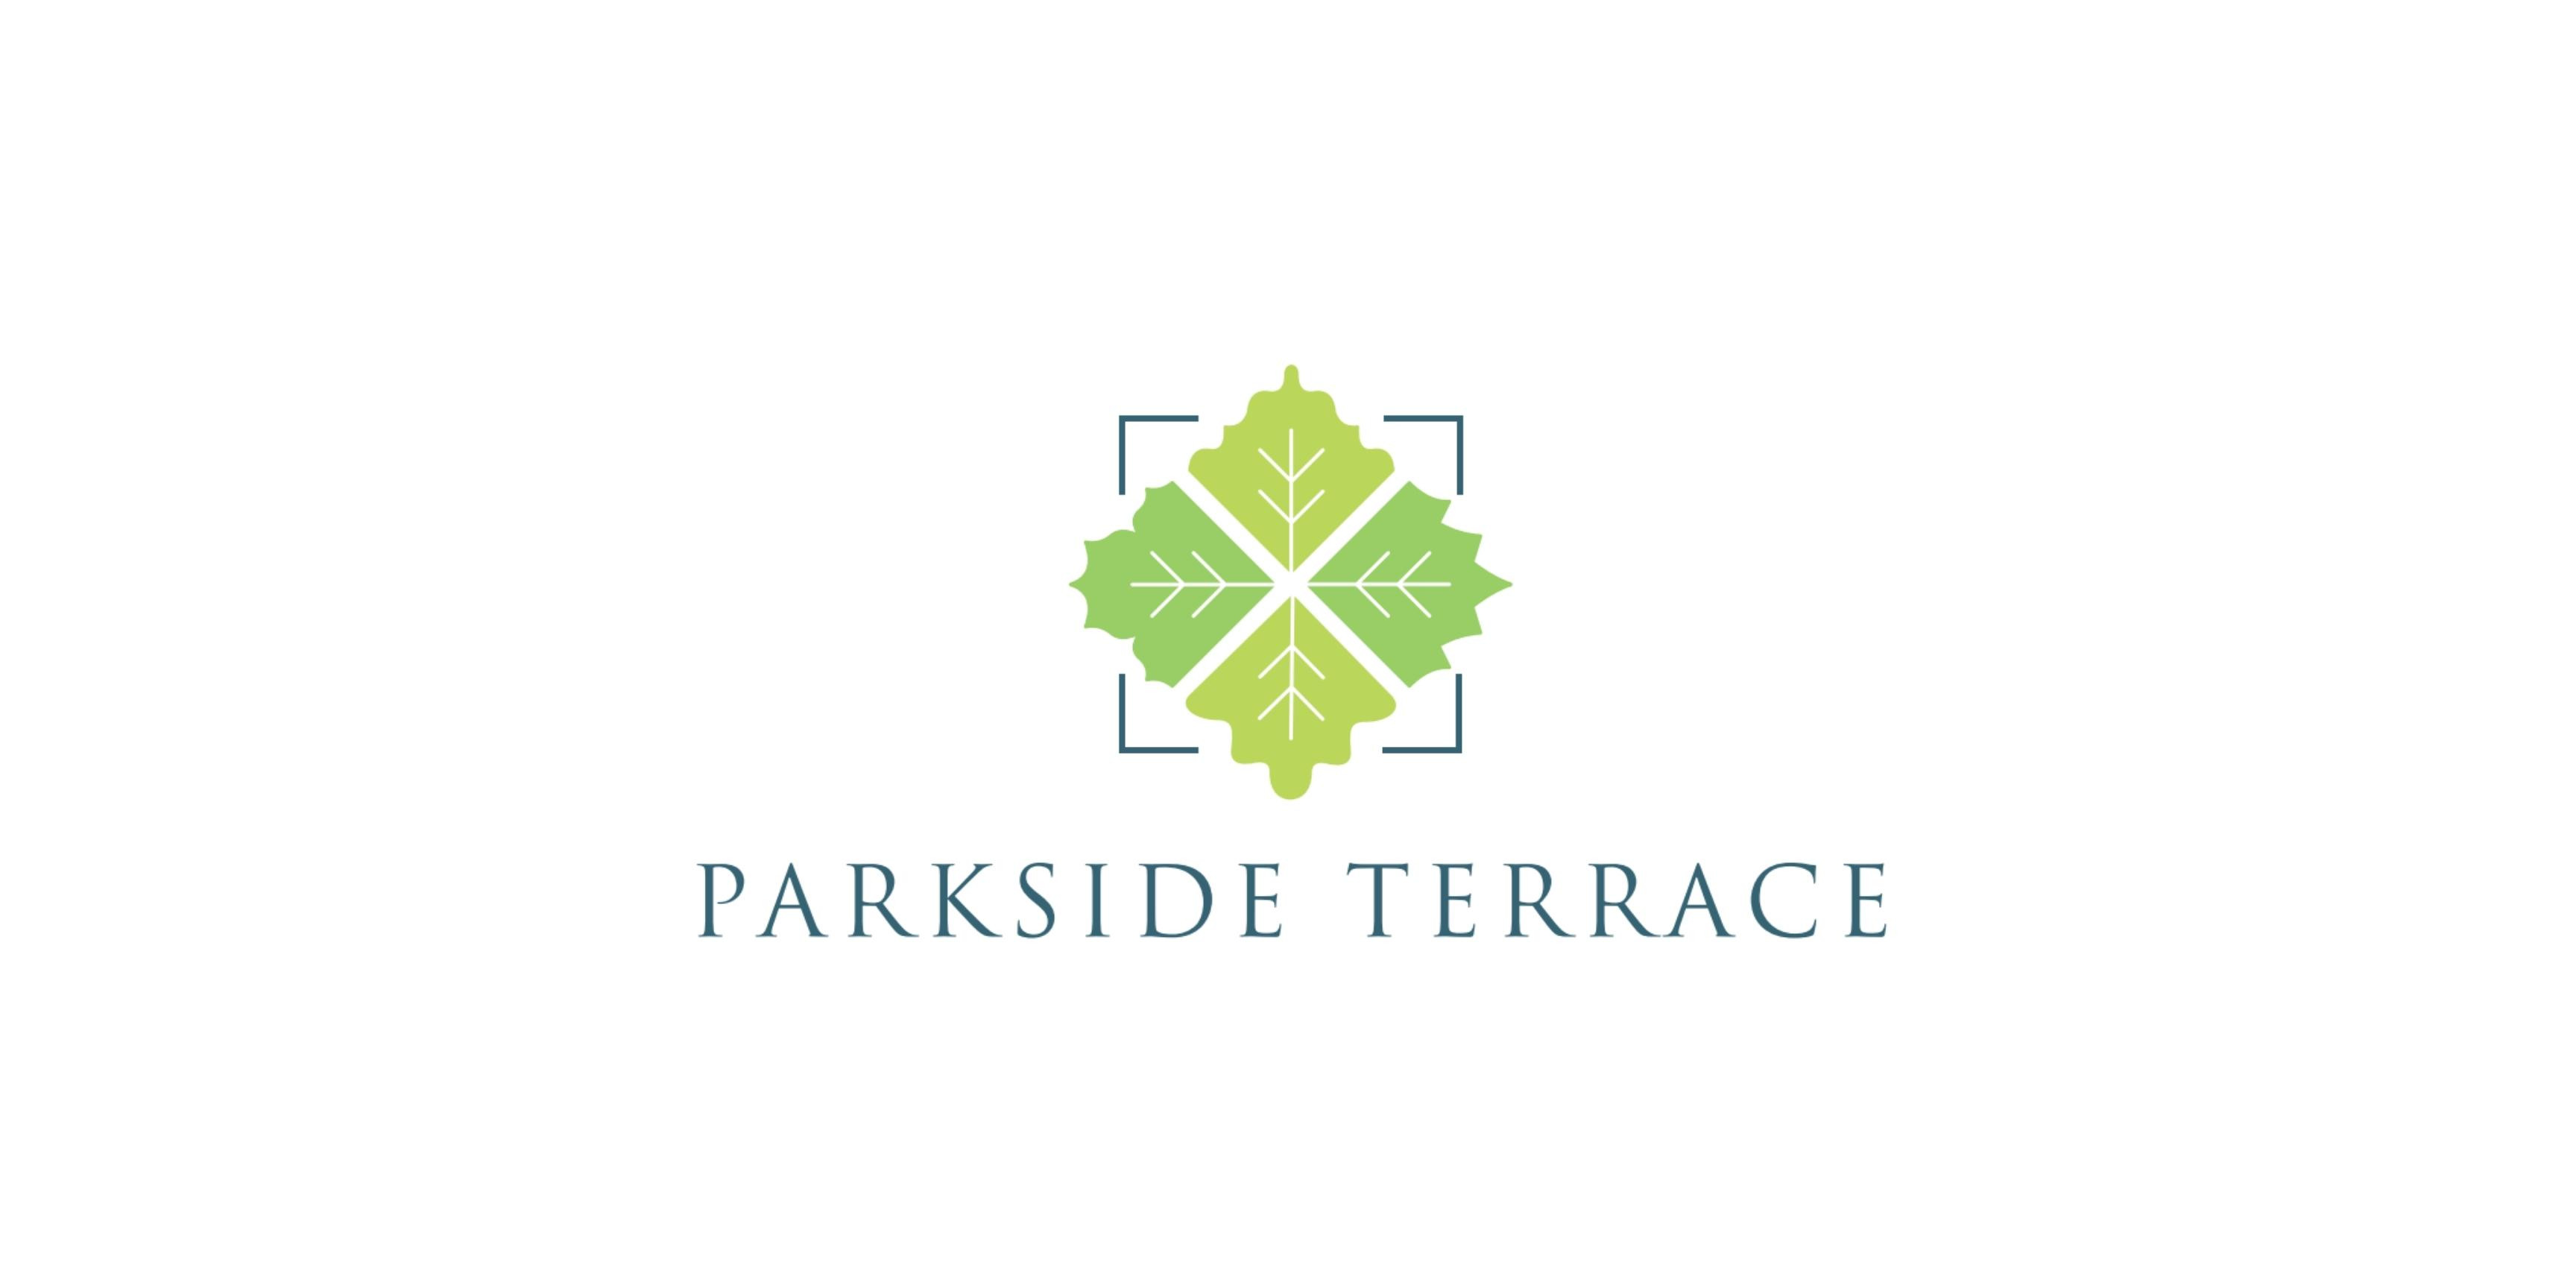 Parkside Terrace development logo